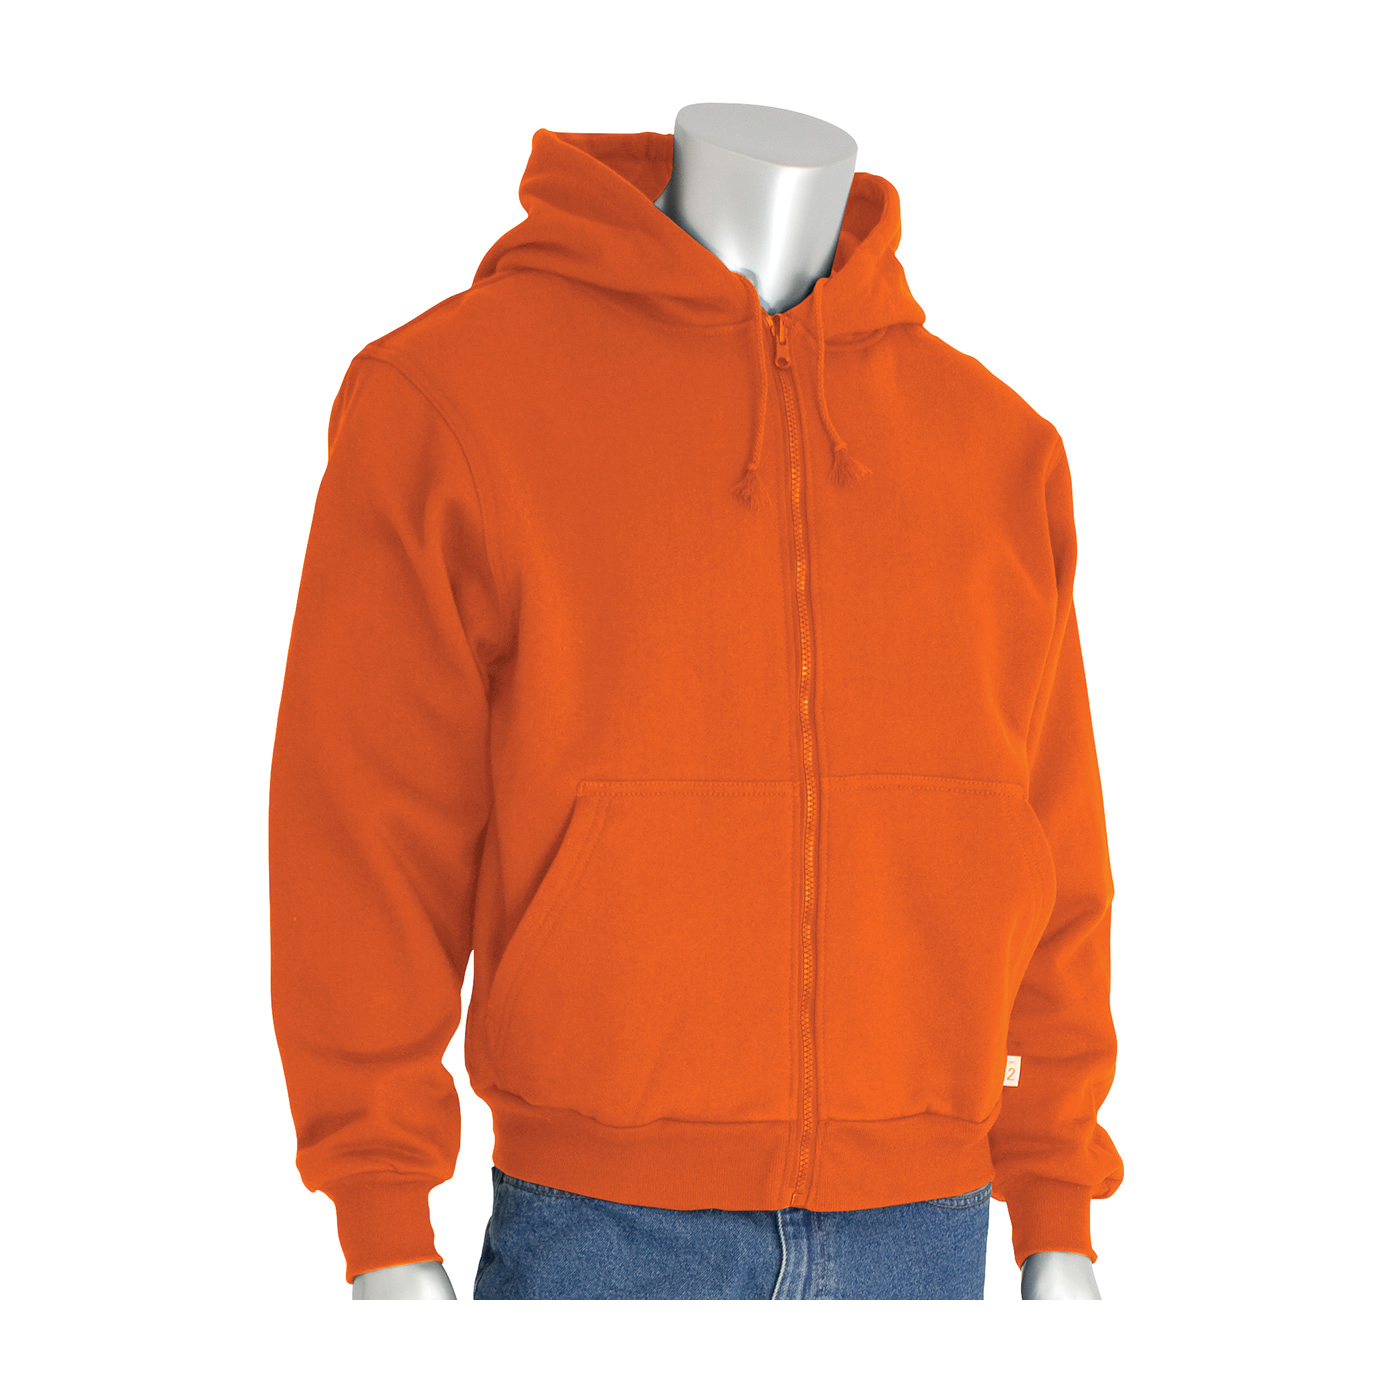 PIP® 385-FRZH-OR/XL Polartec® 385-FRZH Arc and Flame Resistant Sweatshirt, XL, Orange, FR Fleece Knit/100% Cotton, 29-1/2 in Regular, 30-1/2 in Tall L